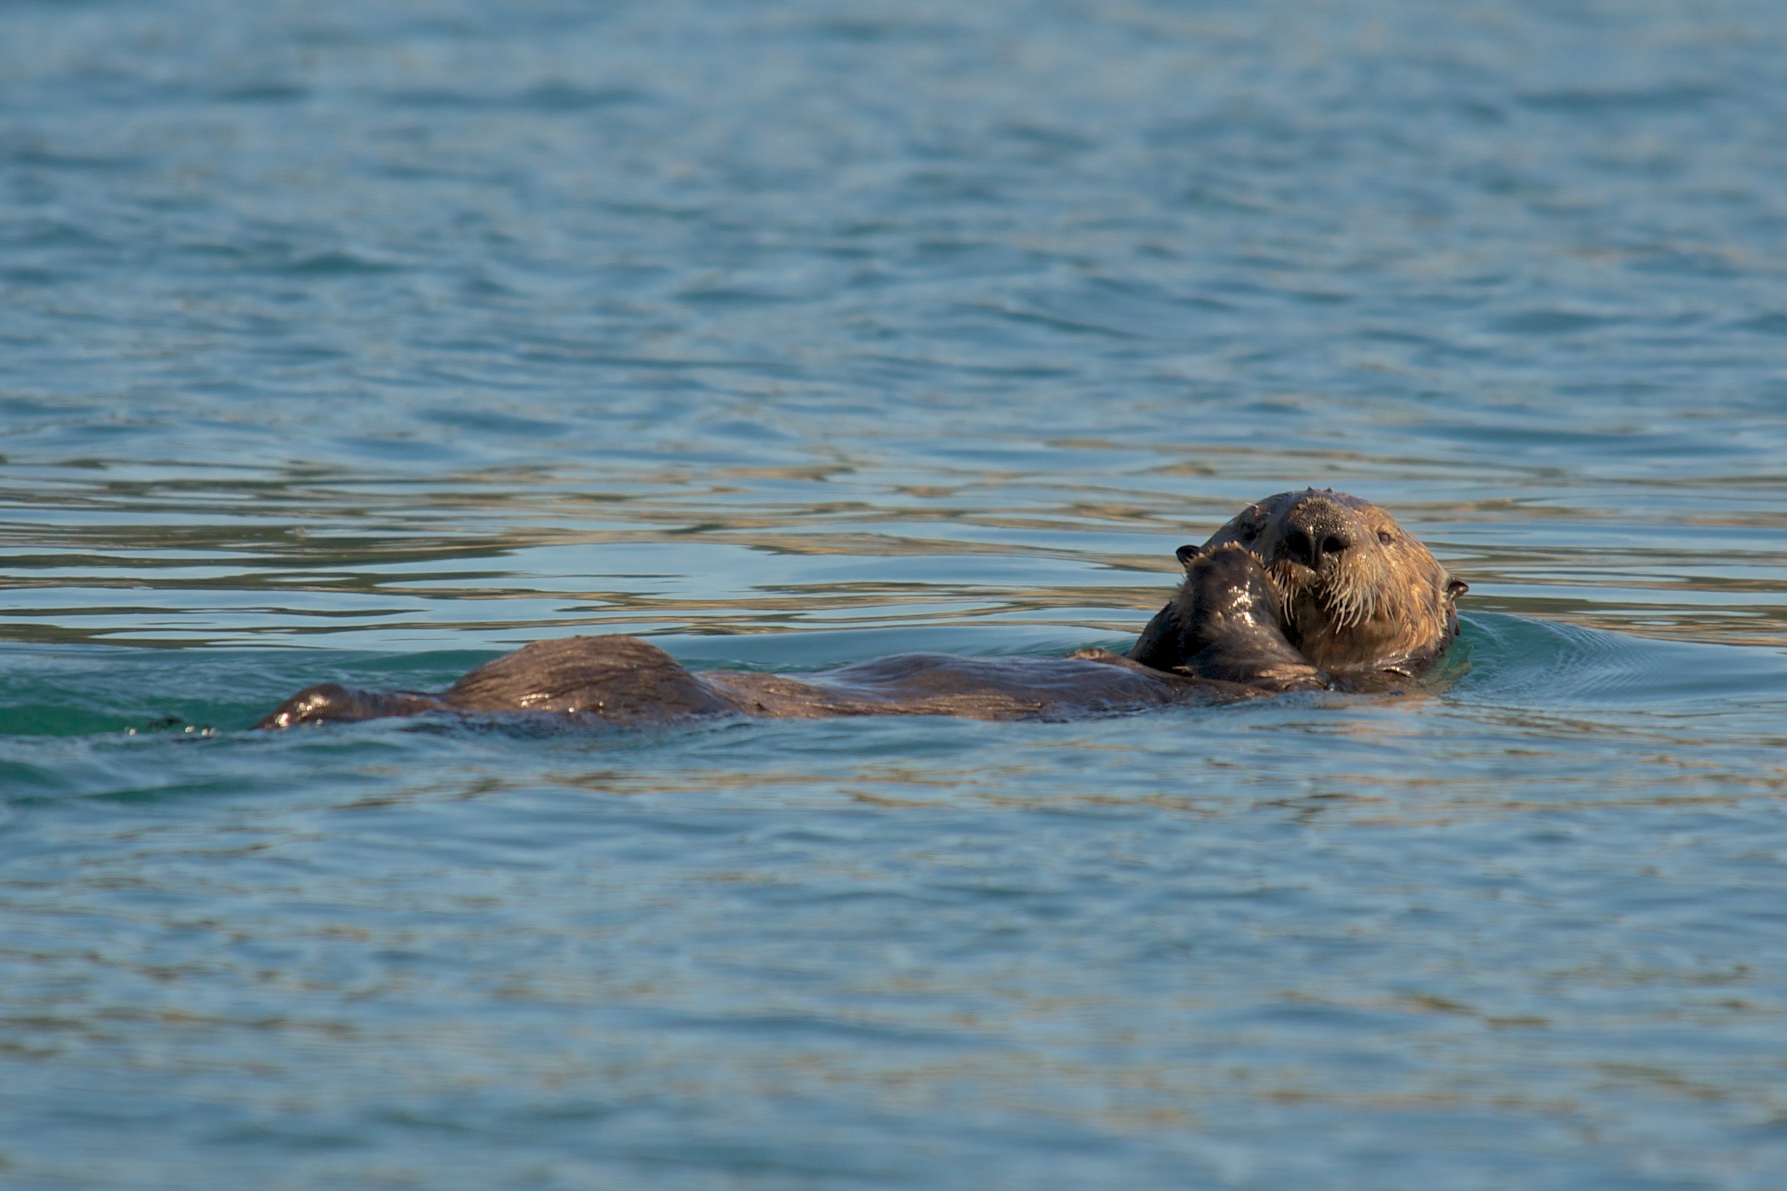  Sea otter, Inian Islands, Alaska 